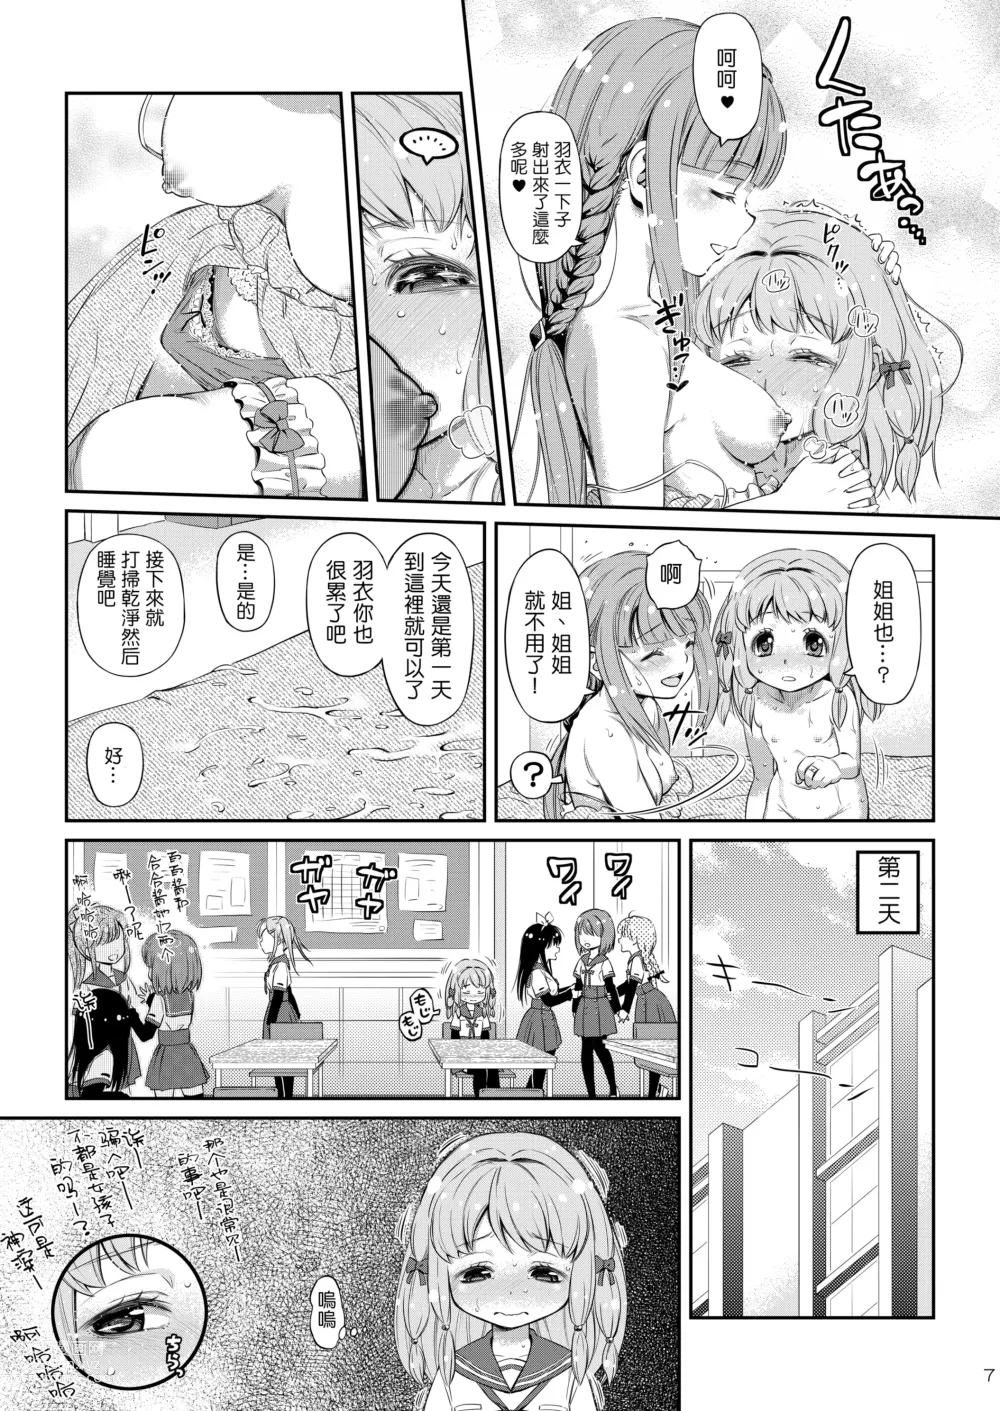 Page 6 of doujinshi Dear My Little Sister